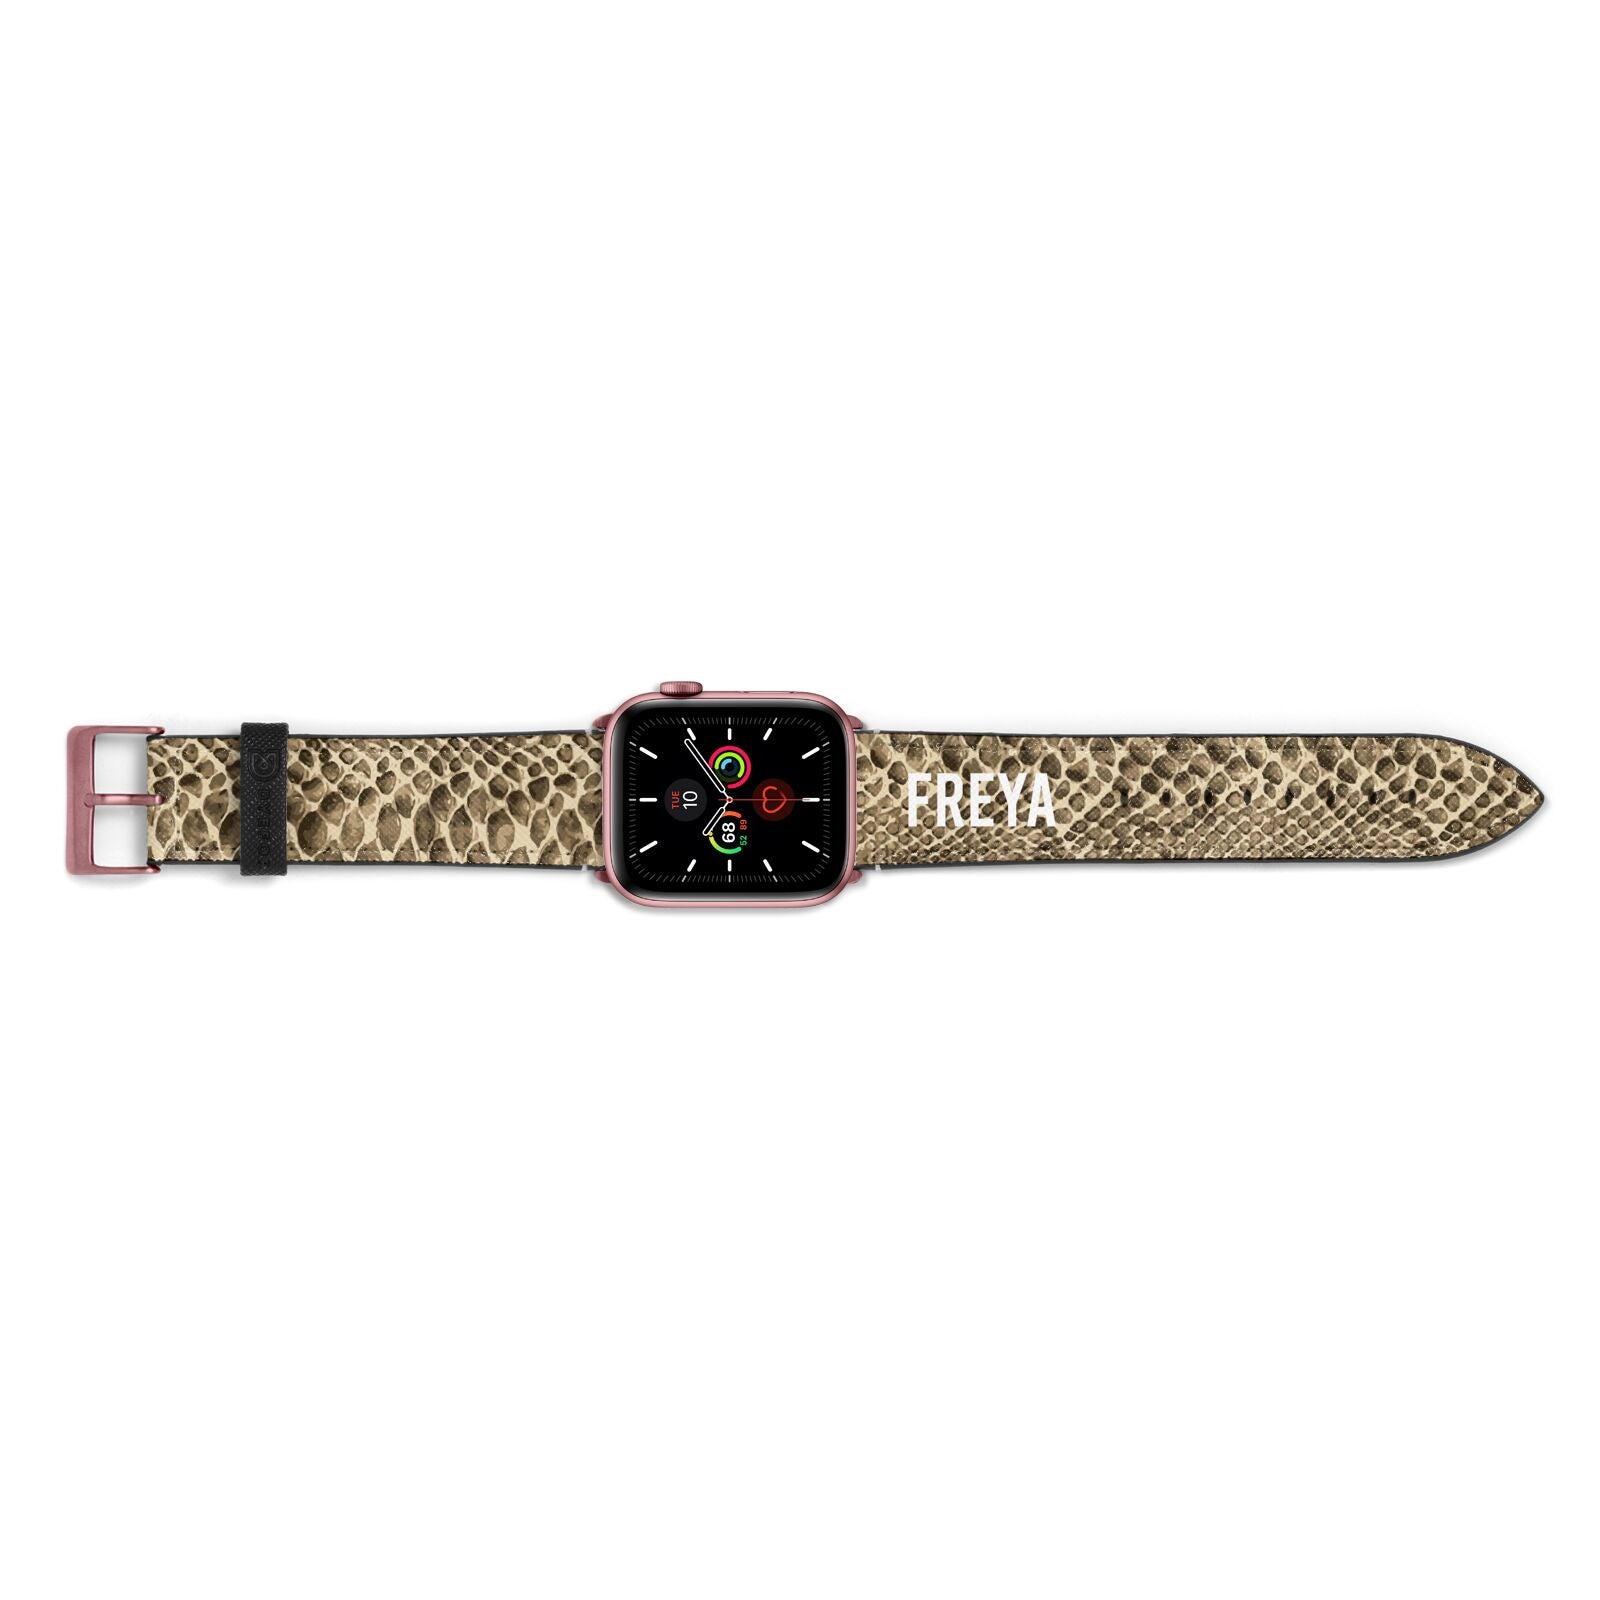 Personalised Tan Snakeskin Apple Watch Strap Landscape Image Rose Gold Hardware